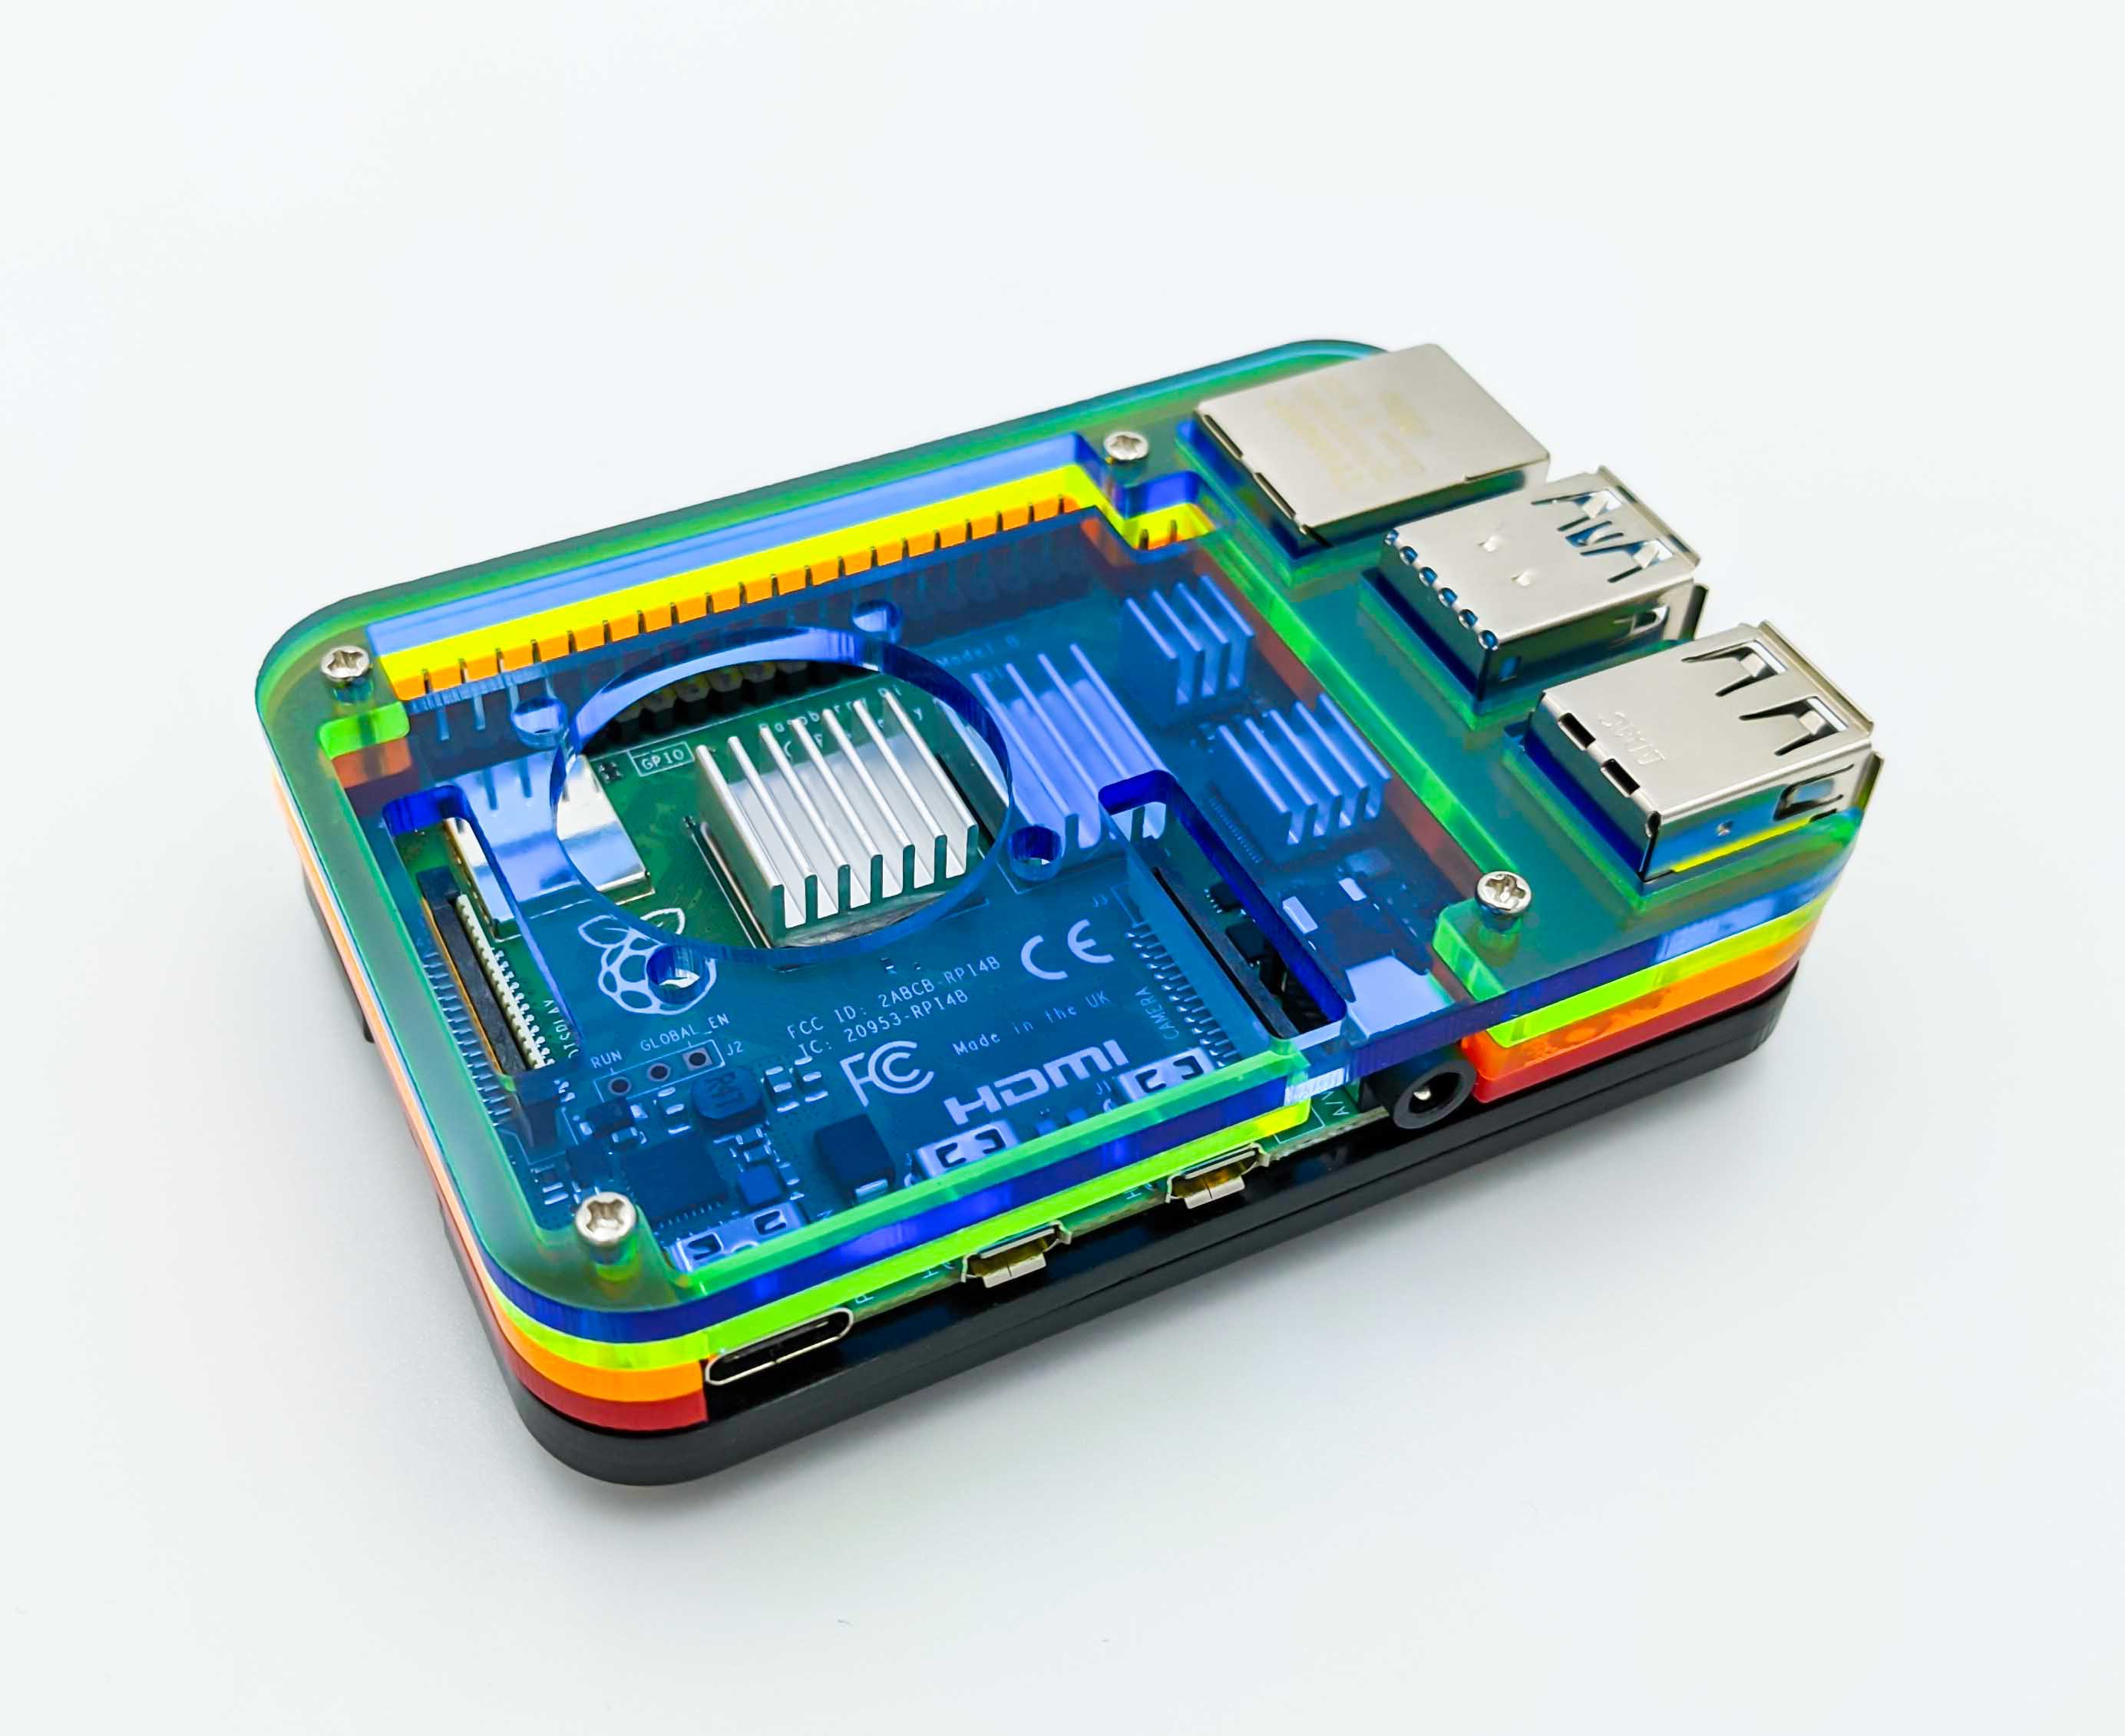 Raspberry Pi 3 Model B with Rainbow Case